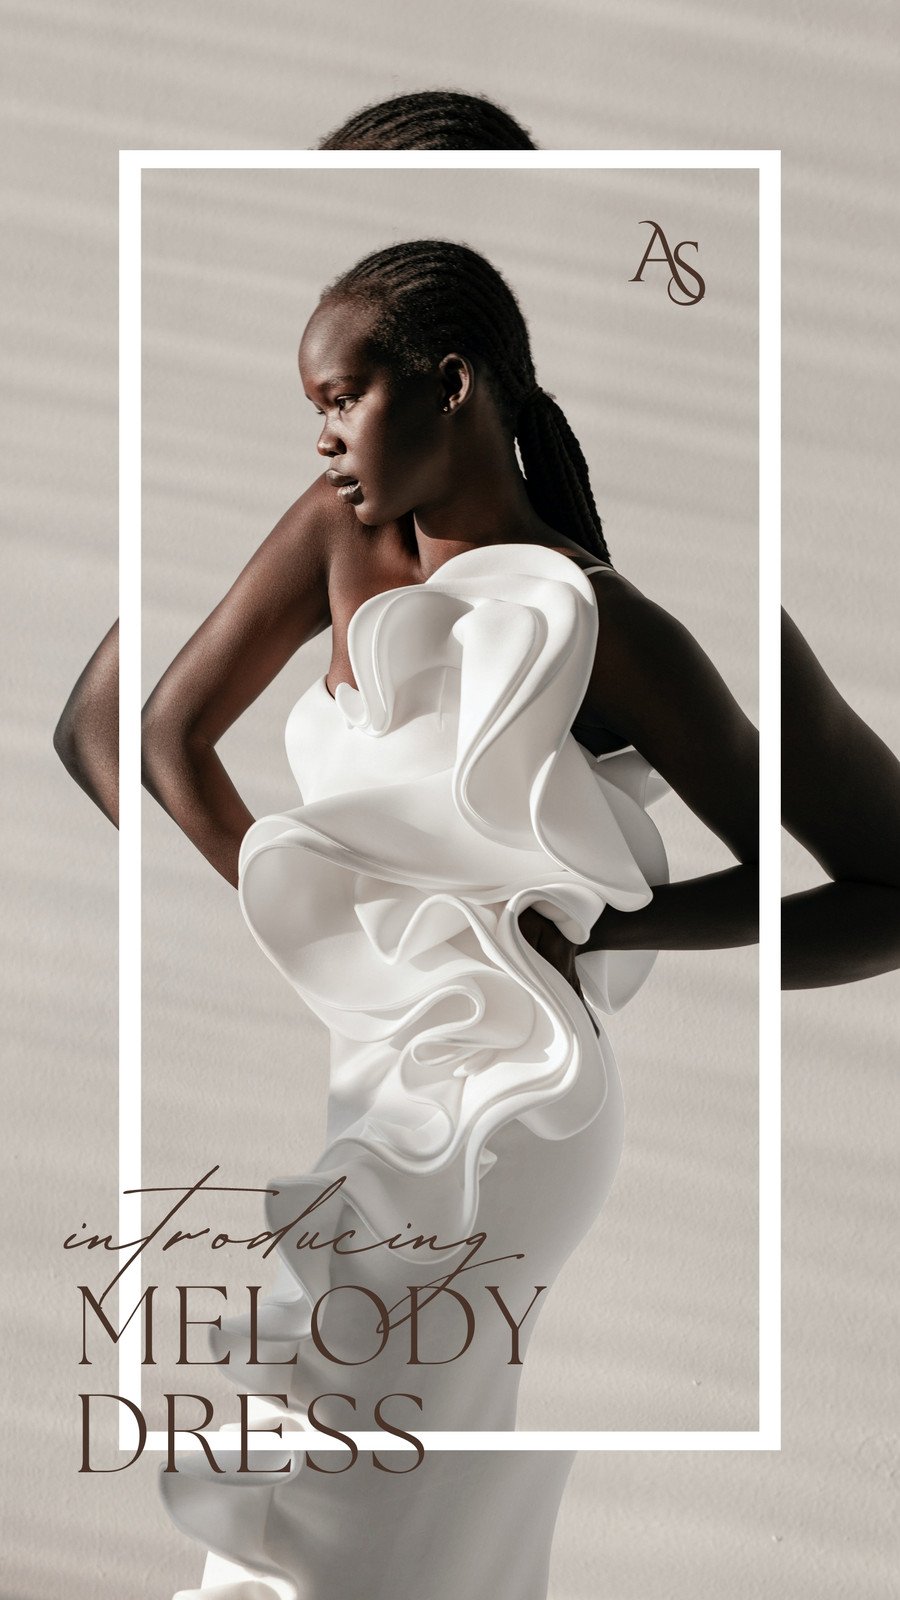 https://marketplace.canva.com/EAFjSR3pzaY/1/0/900w/canva-beige-white-elegant-fashion-brand-instagram-story-rqNQfS_bygY.jpg